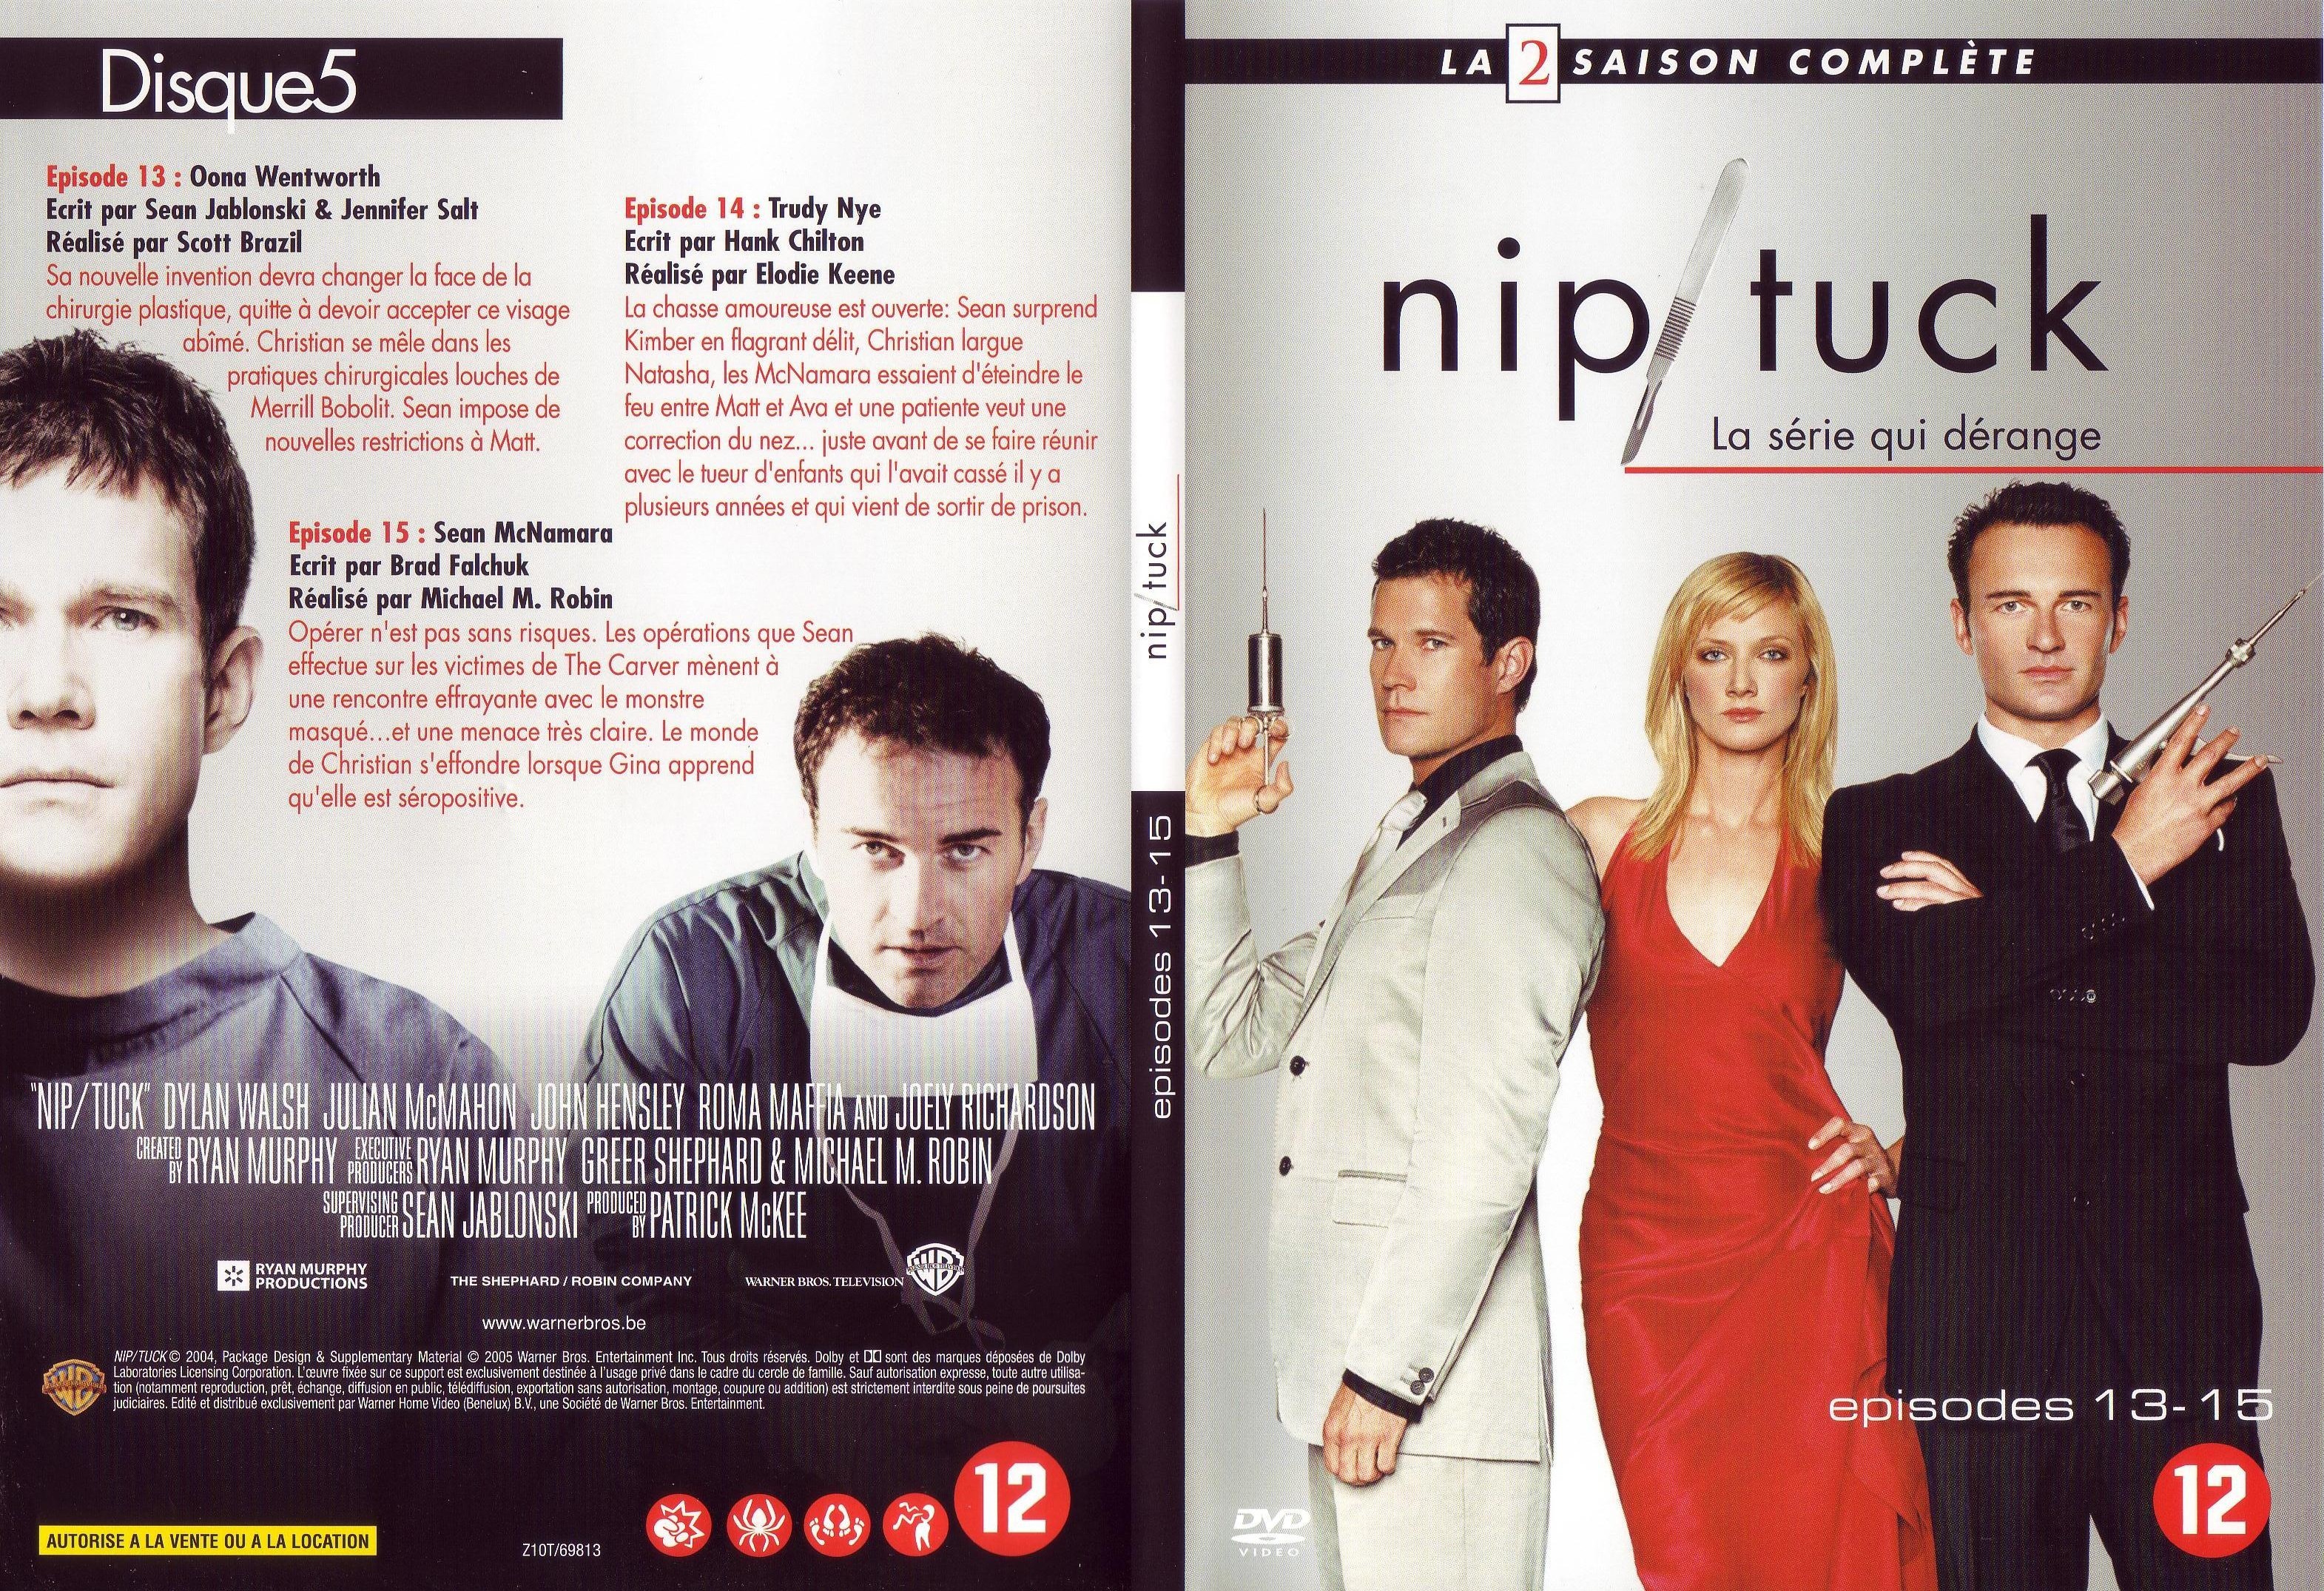 Jaquette DVD Nip-Tuck saison 2 DVD 5